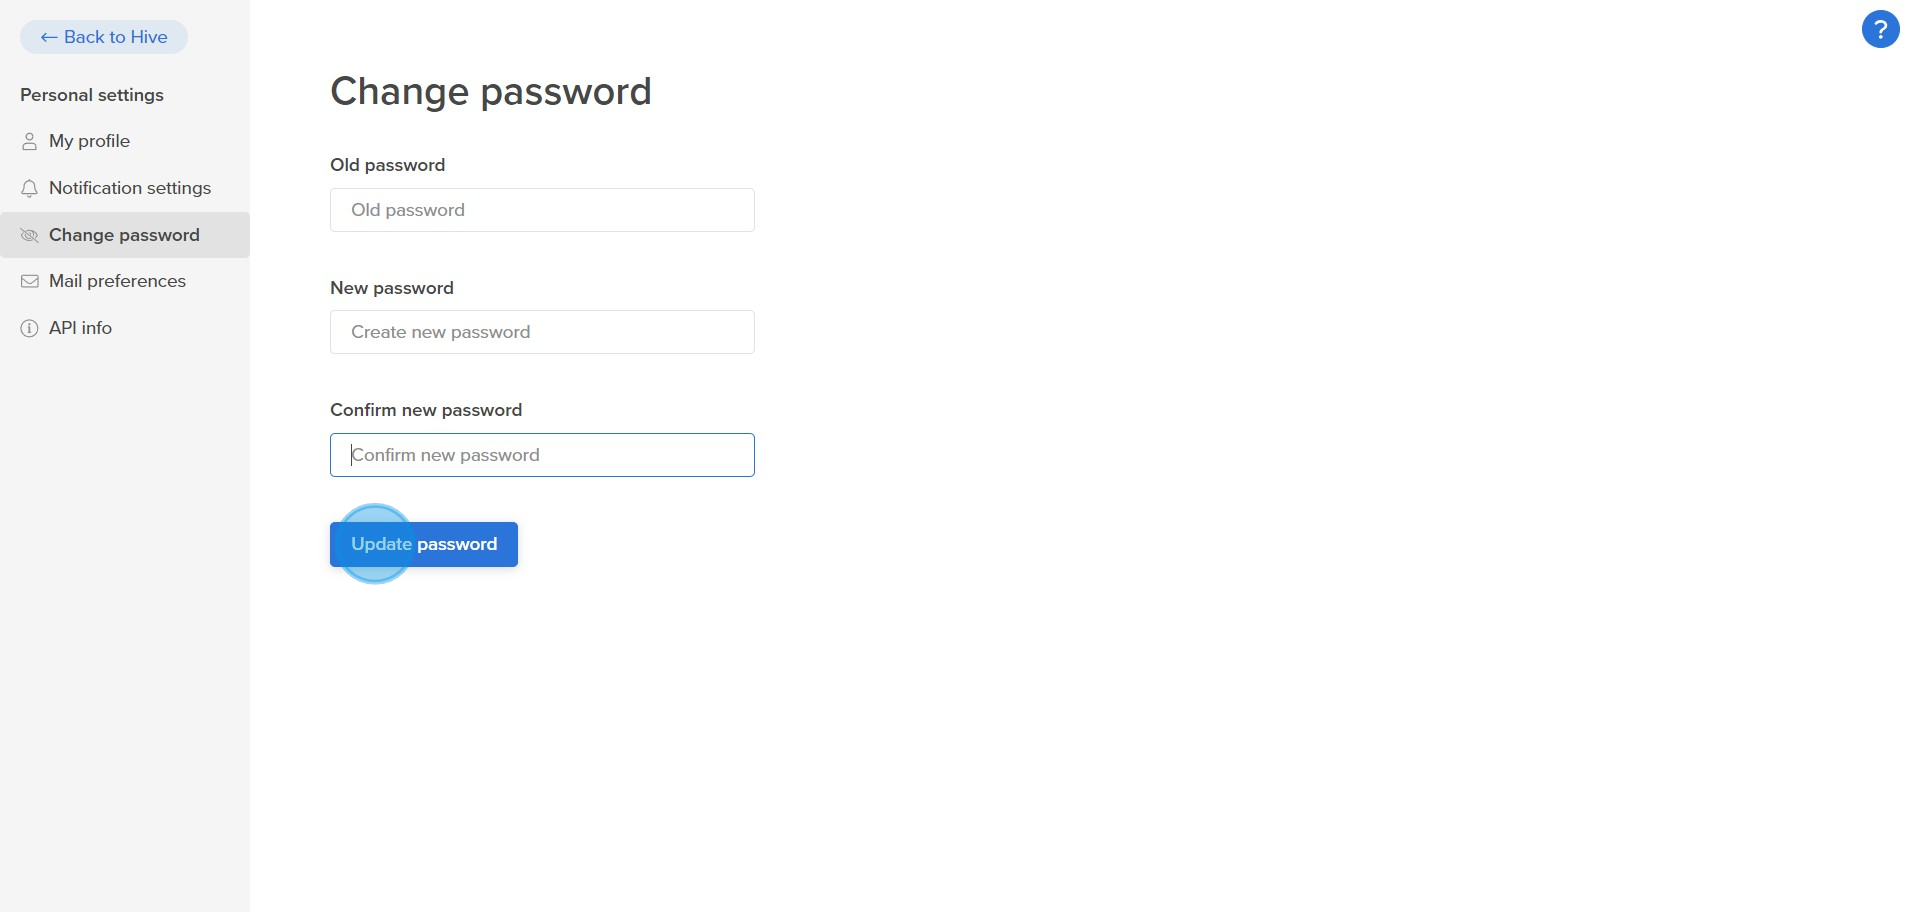 4 Click on "Update password"